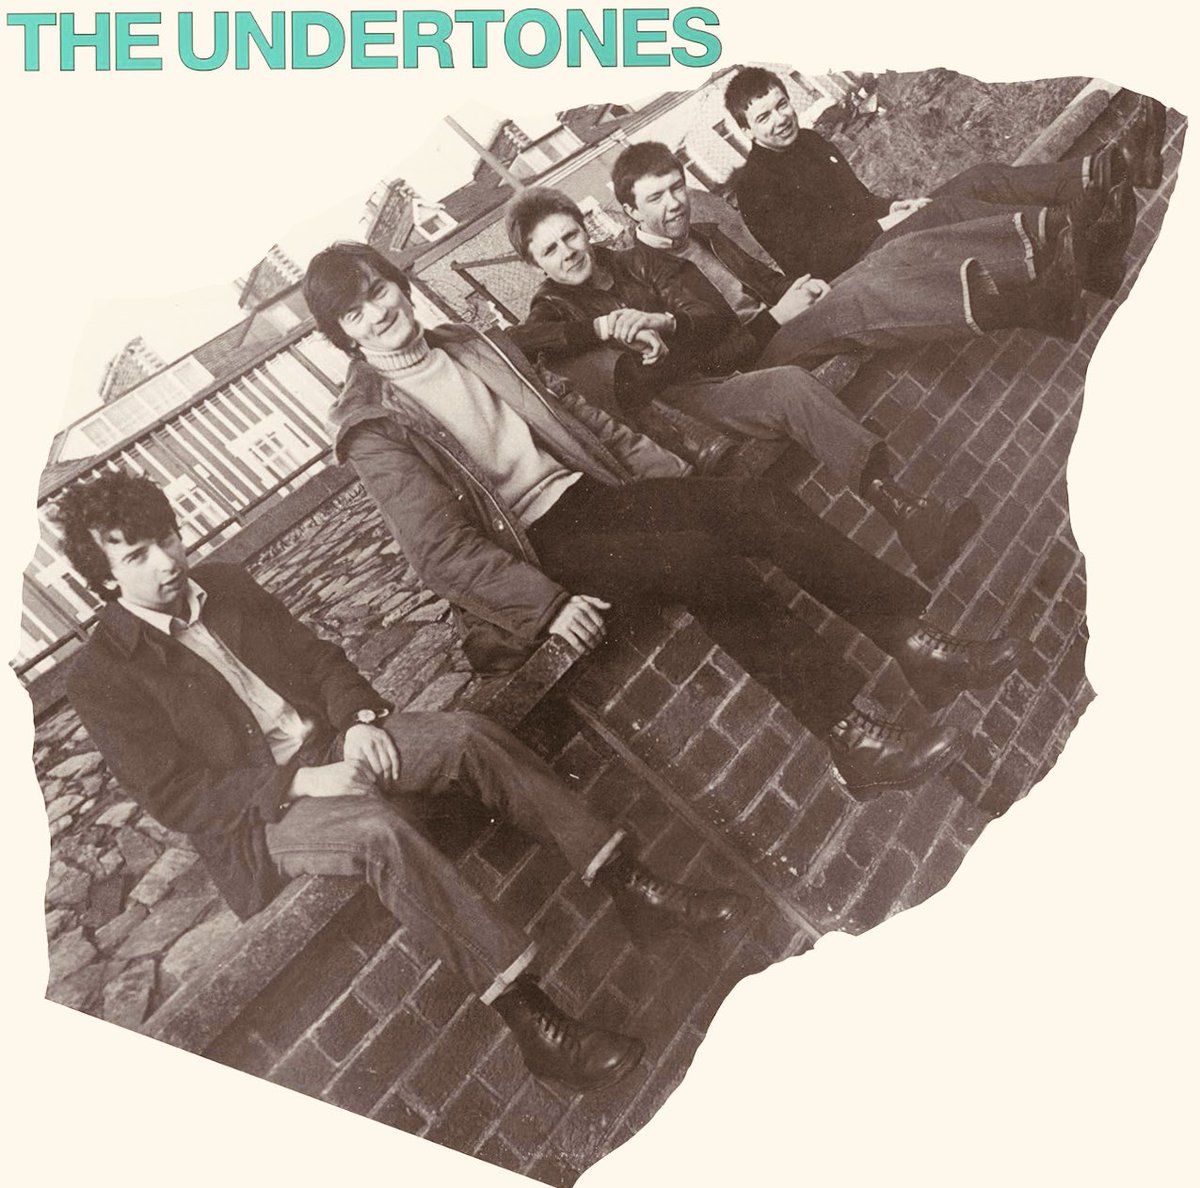 The Undertones 
Eponymous Debut 

13 May 1979

Love this album 

@NewWaveAndPunk #theundertones #punk #vinylrecords #records #debut #70s #vinylcommunity @Feargal_Sharkey